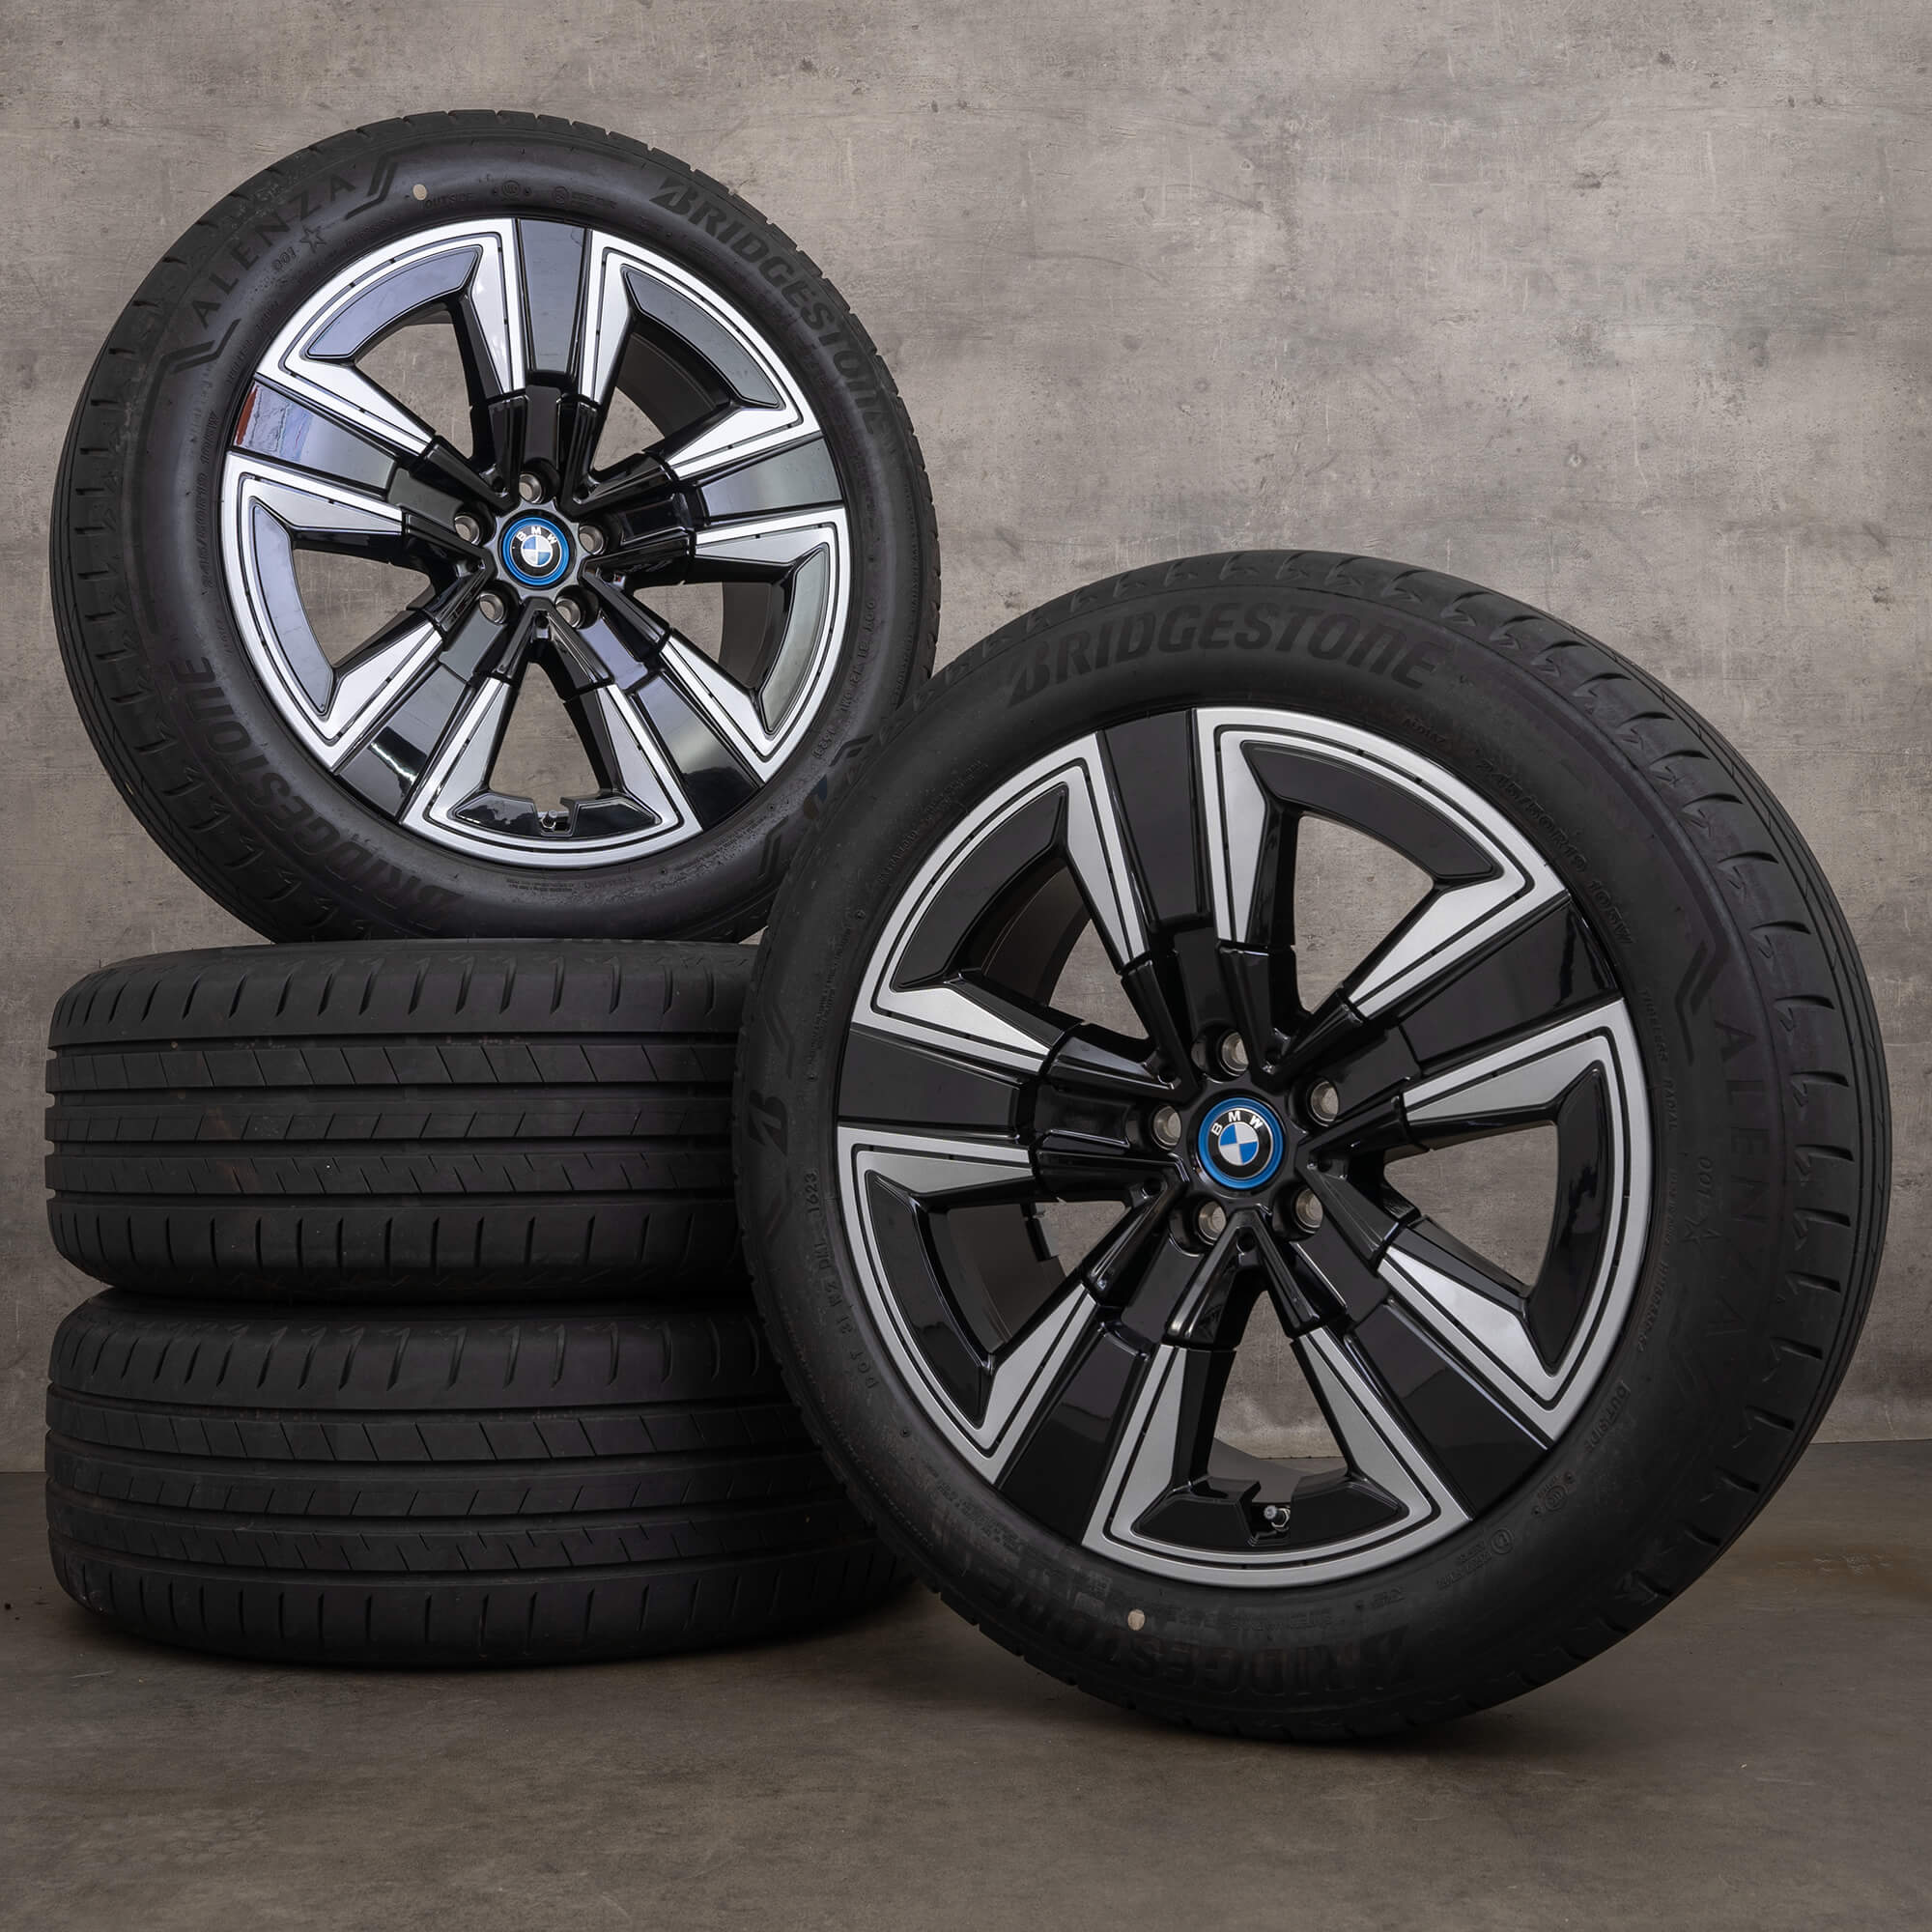 OEM BMW iX3 G08 19 inch winter wheels rims 6895627 Styling 842 jet black